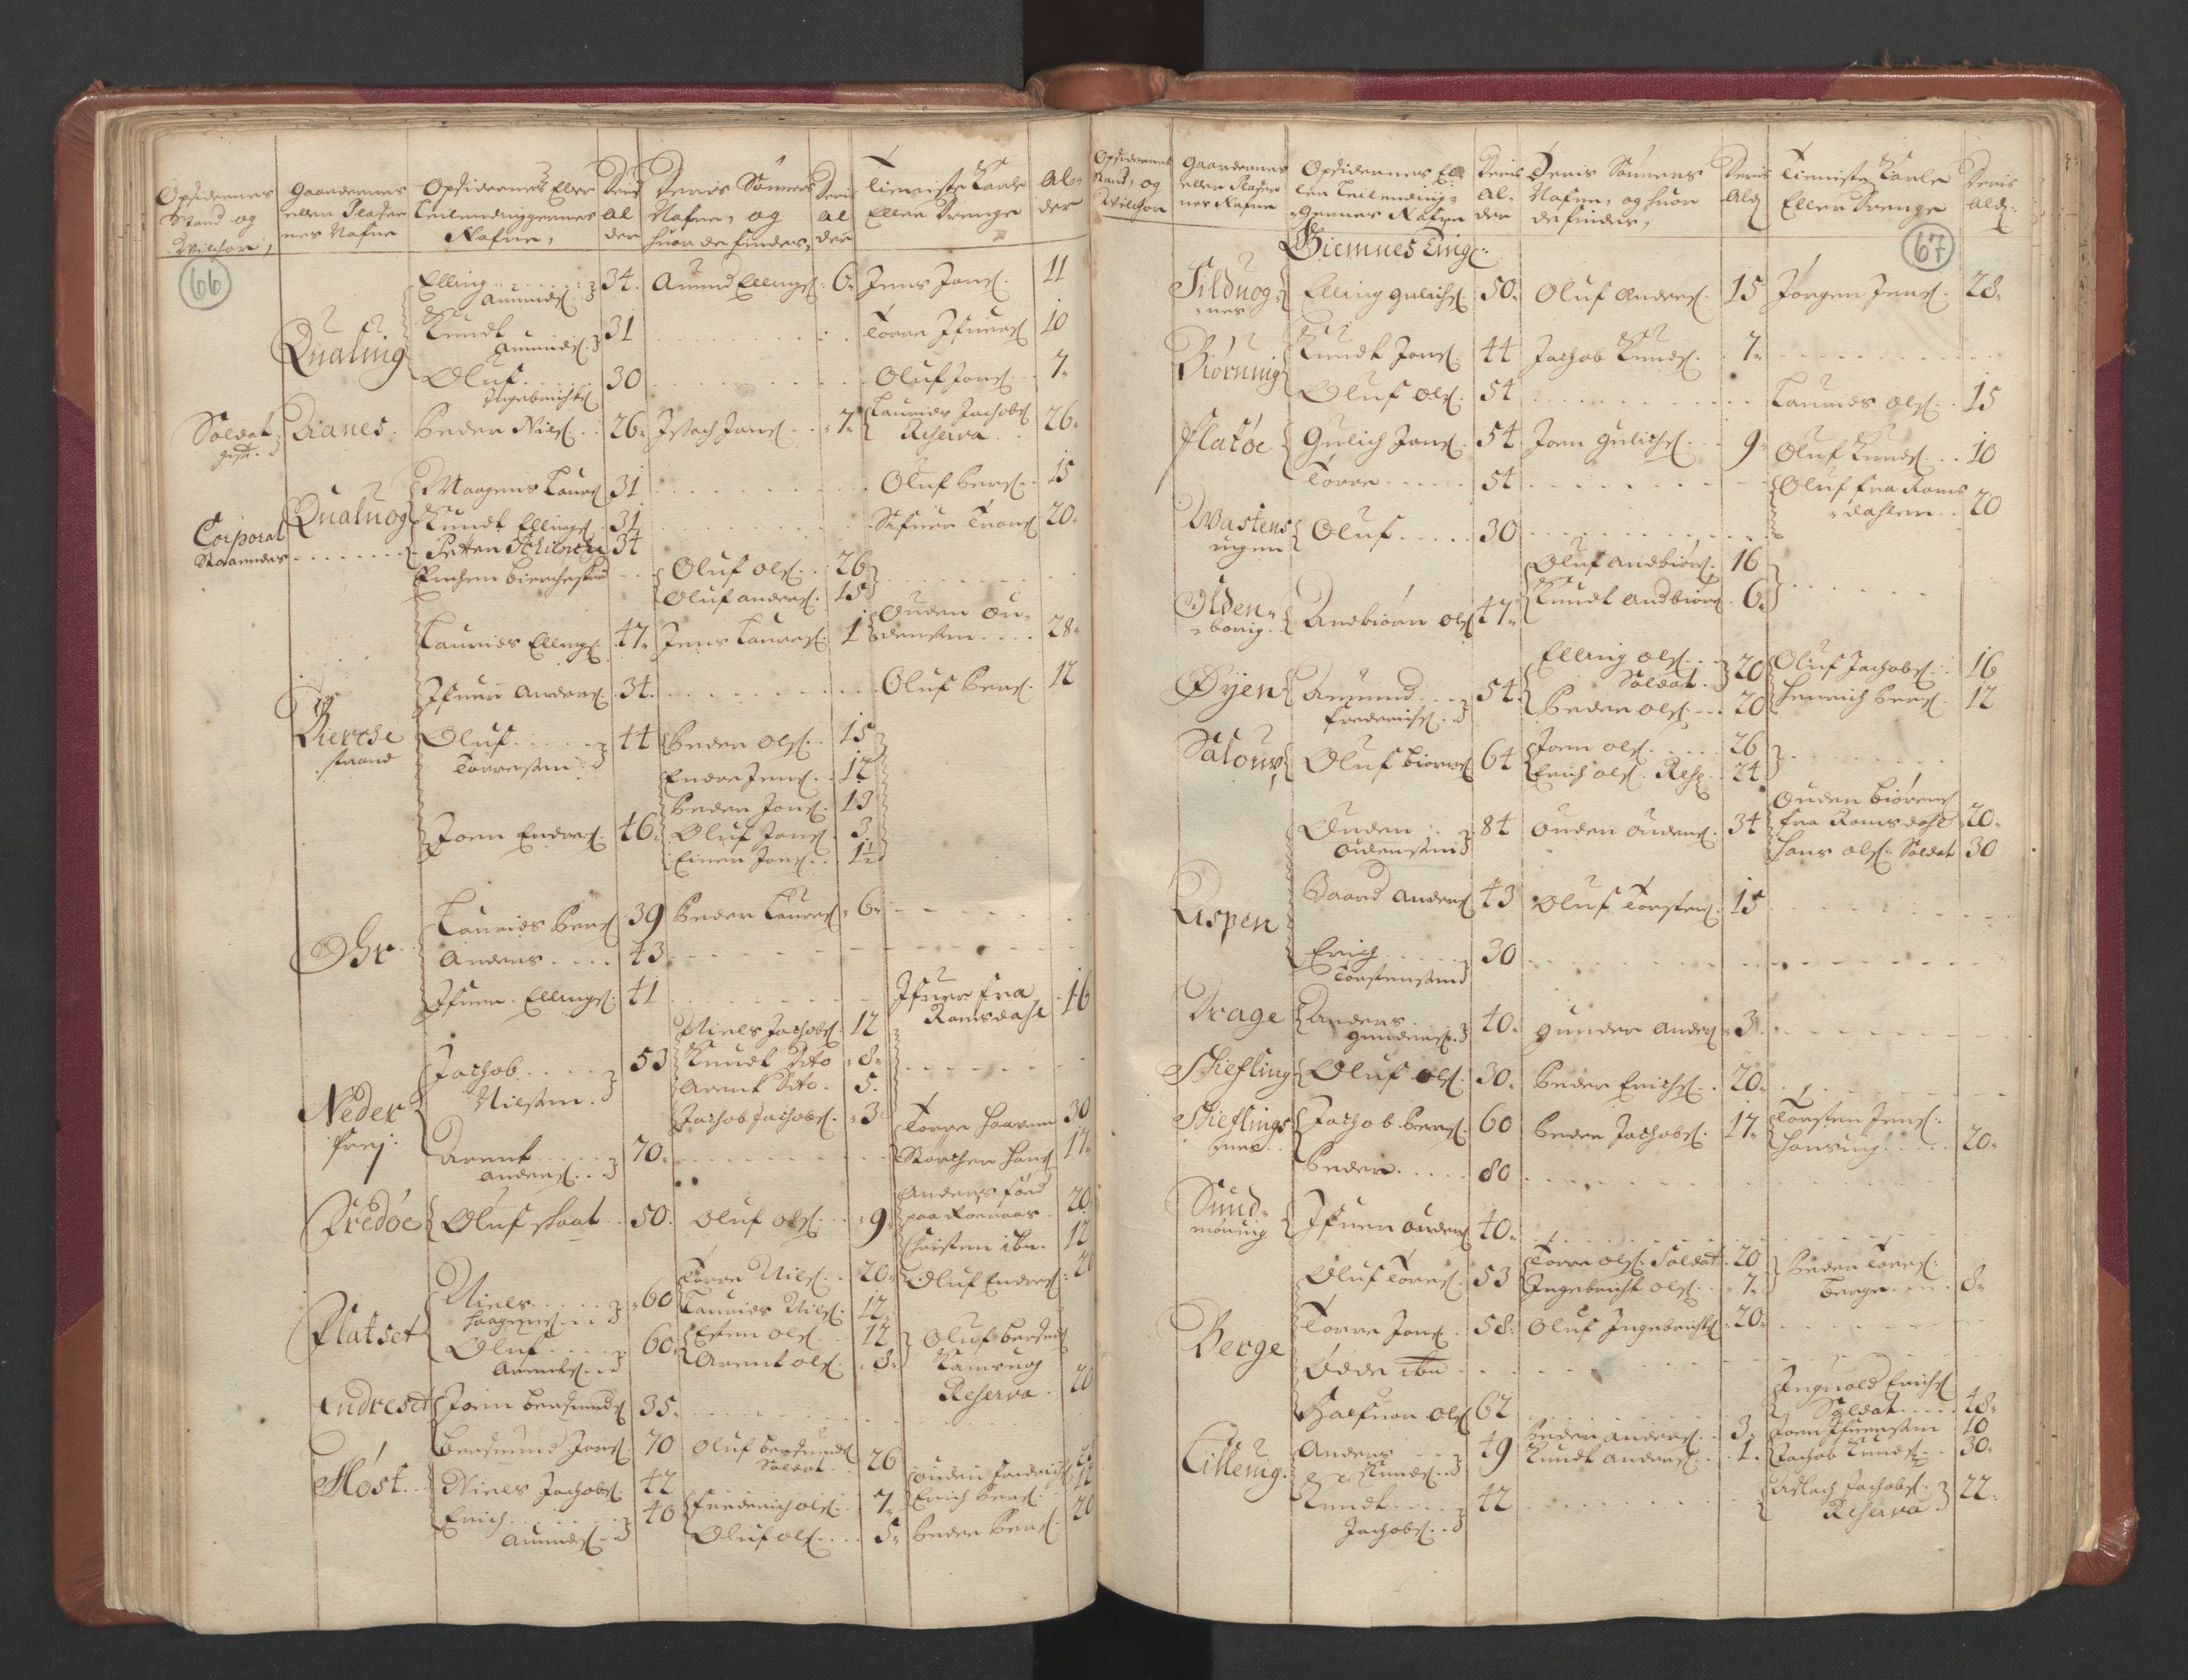 RA, Manntallet 1701, nr. 11: Nordmøre fogderi og Romsdal fogderi, 1701, s. 66-67